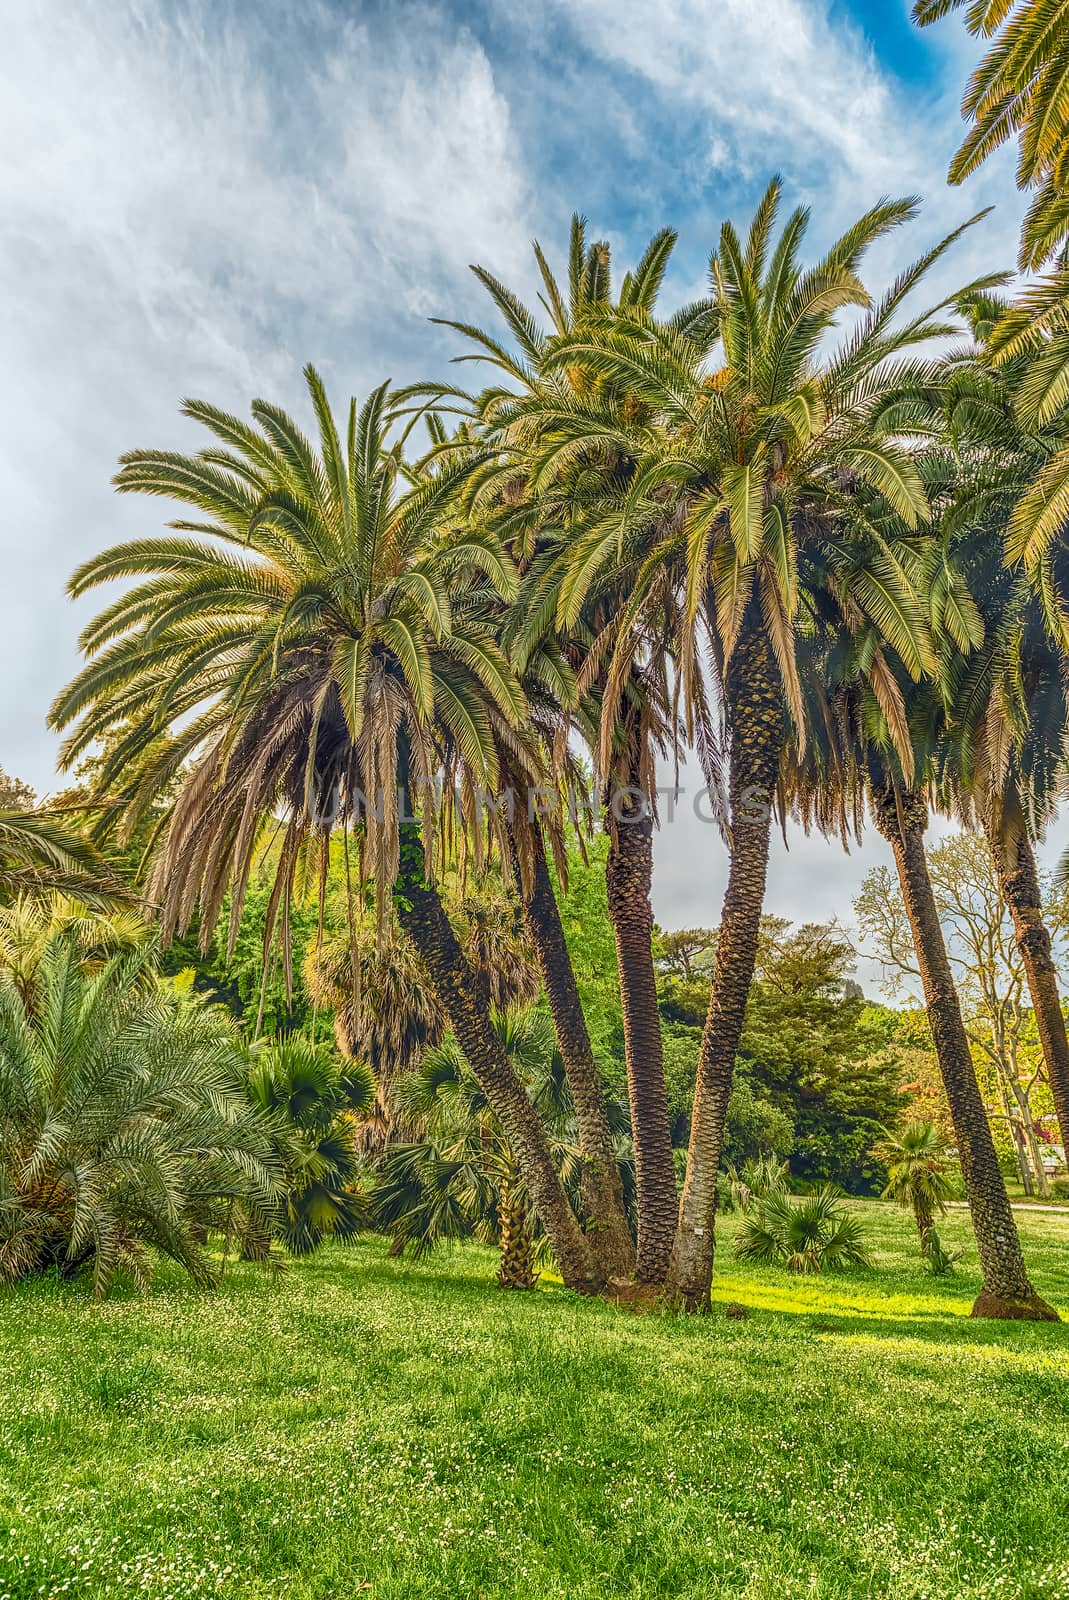 Scenic palm trees inside a public garden in Rome, Italy by marcorubino